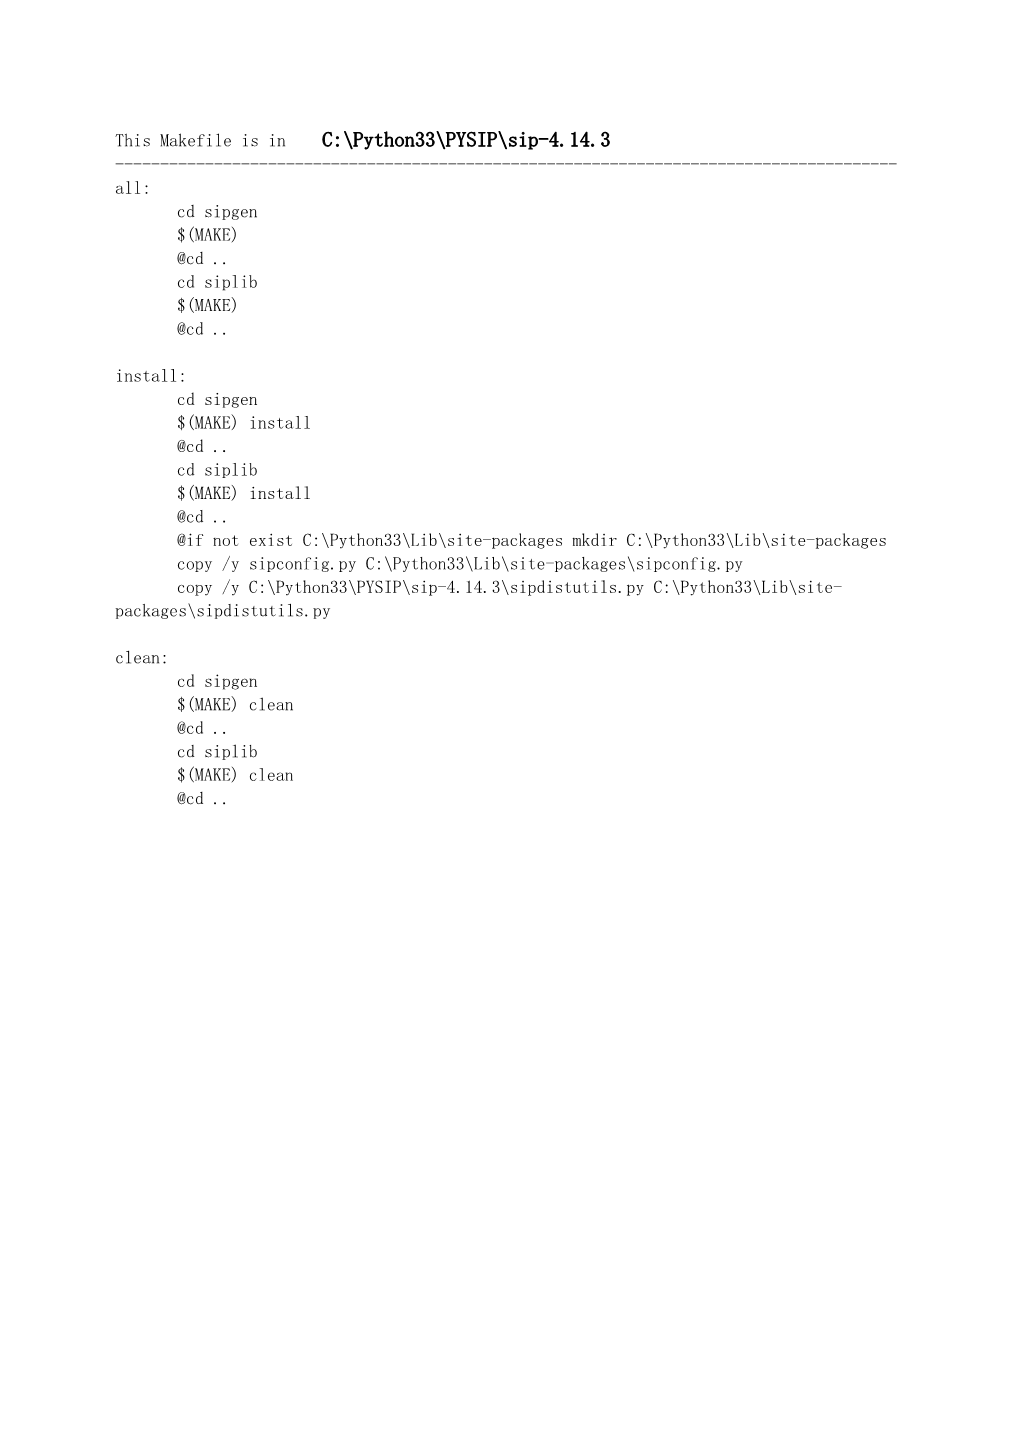 This Makefile Is in C: Python33 PYSIP Sip-4.14.3